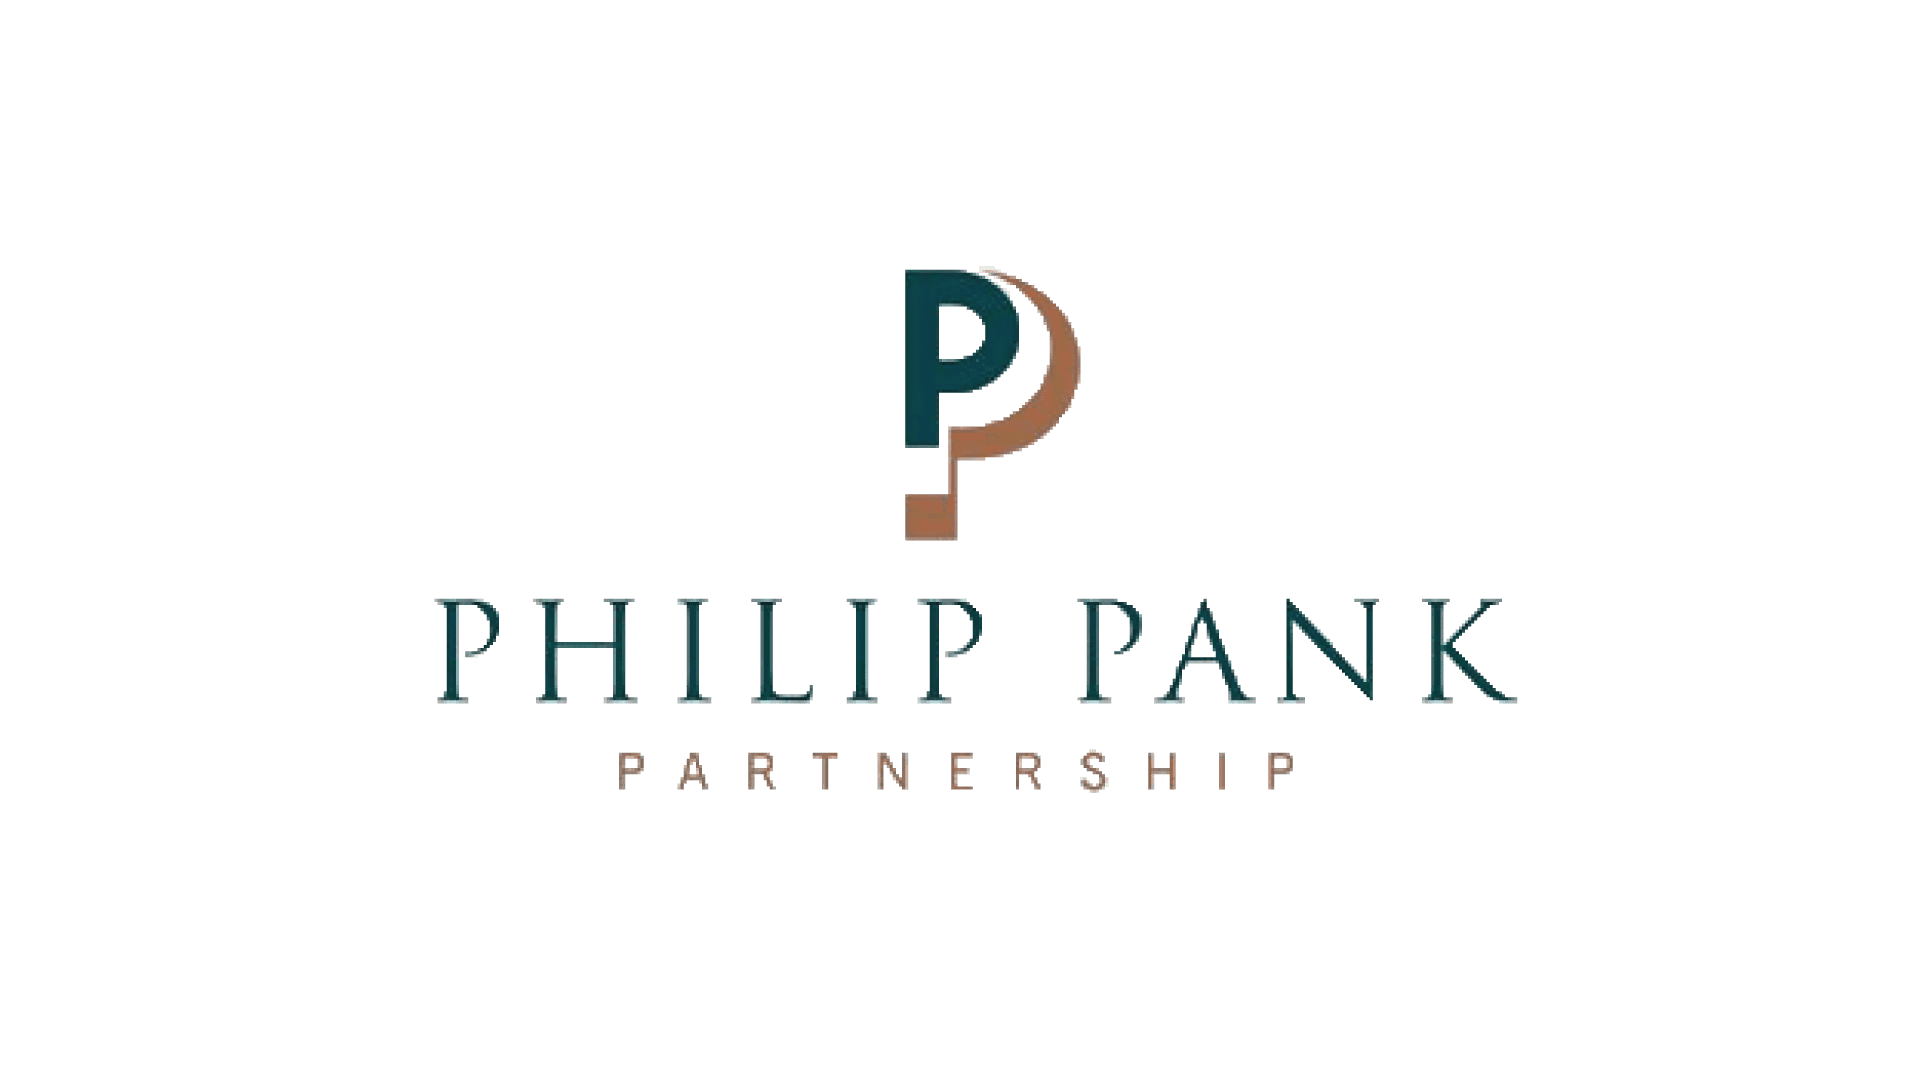 Philip Pank Partnership works with CADS